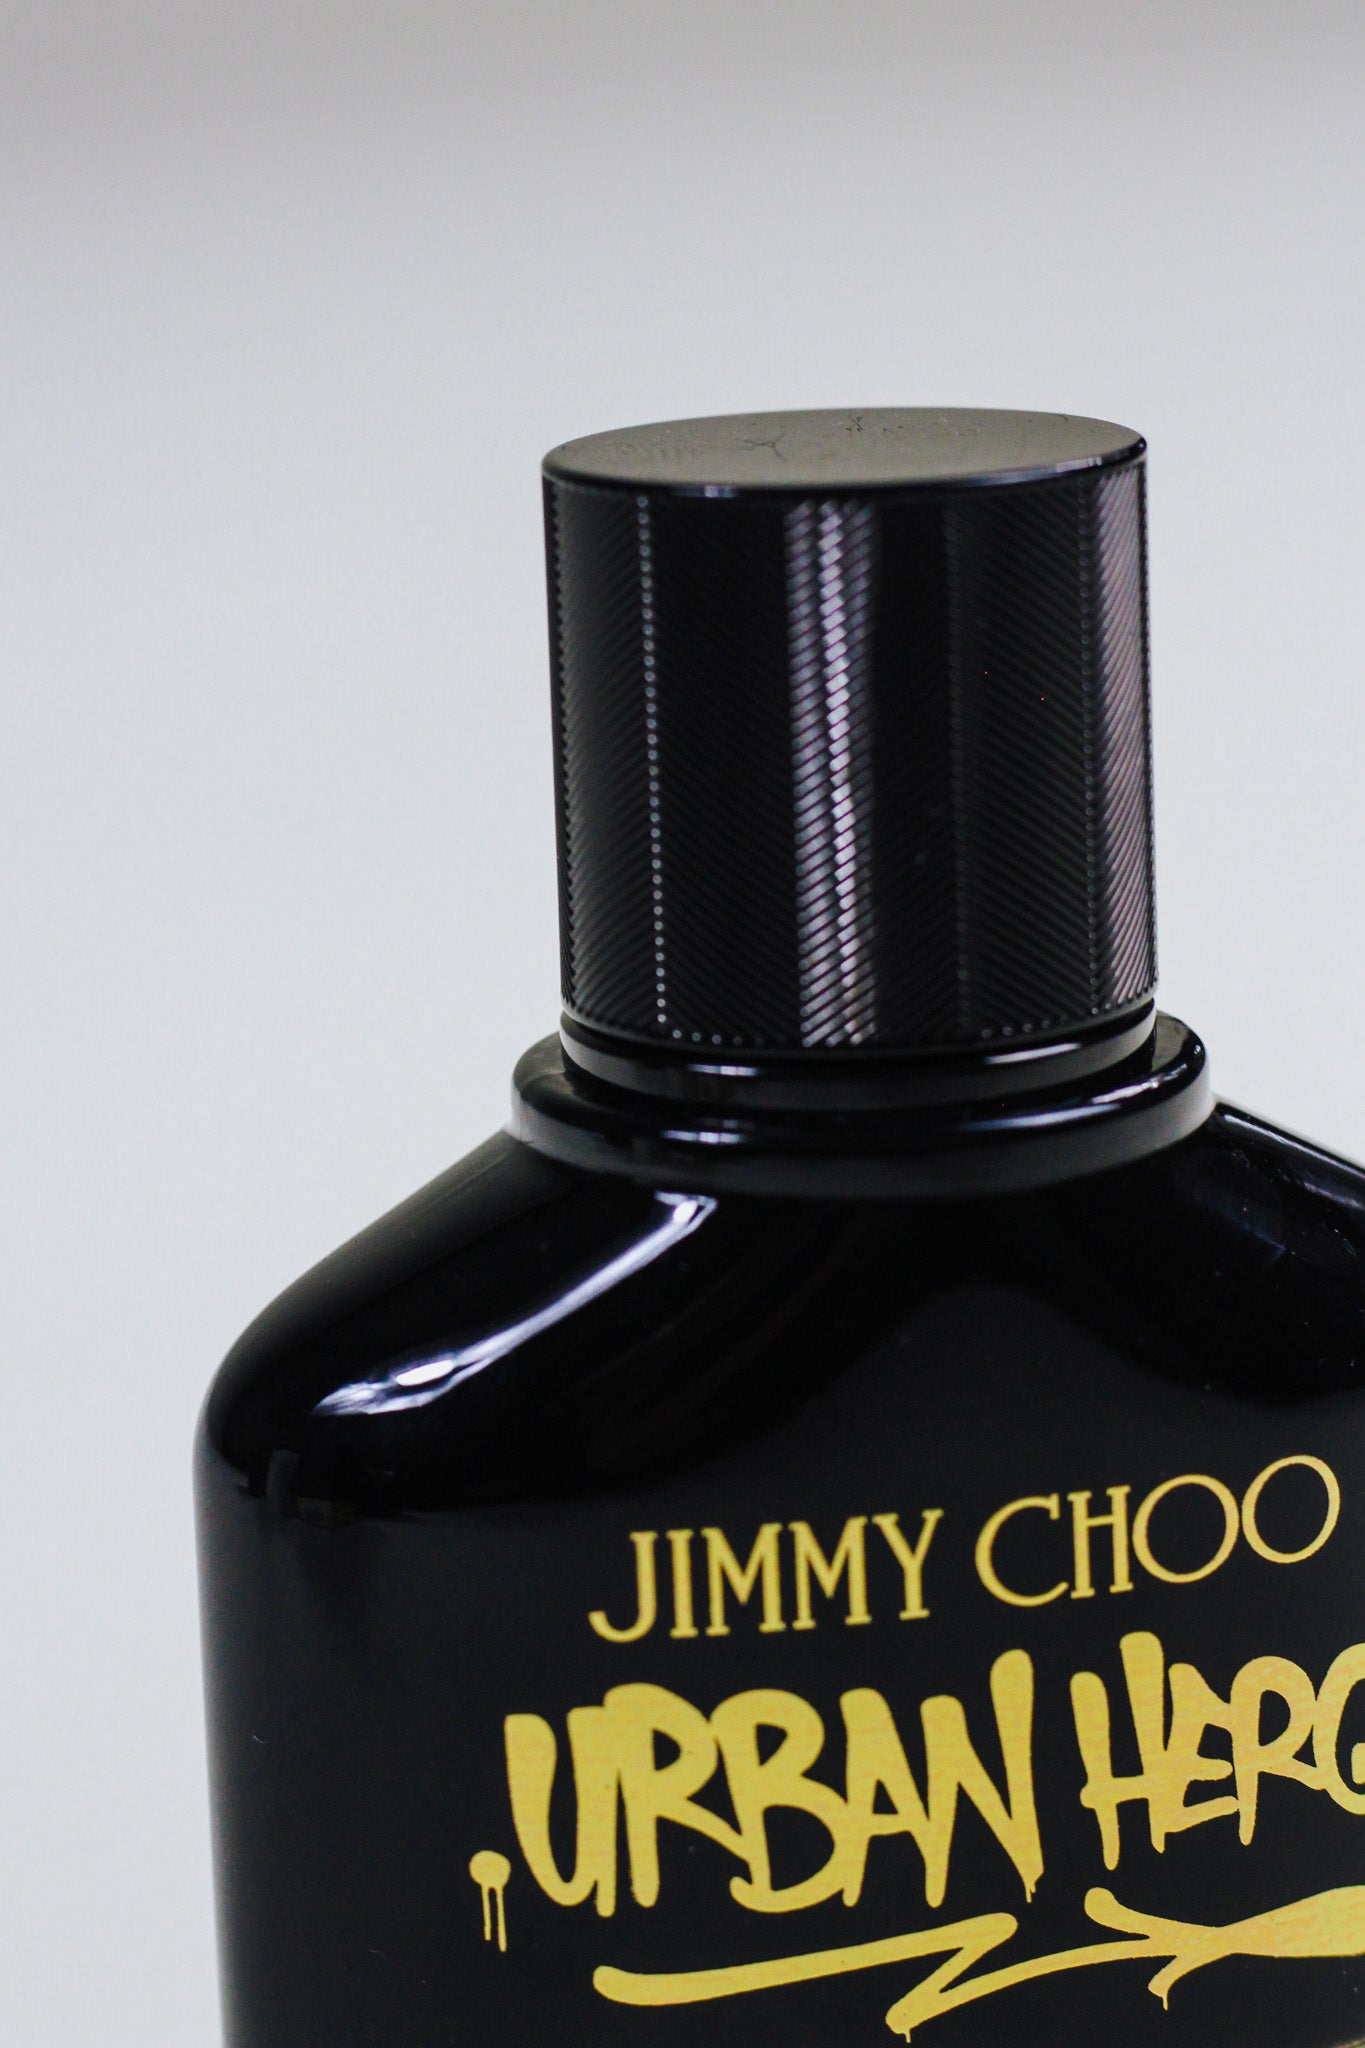 Jimmy Choo Urban Hero Eau De Parfum Spray